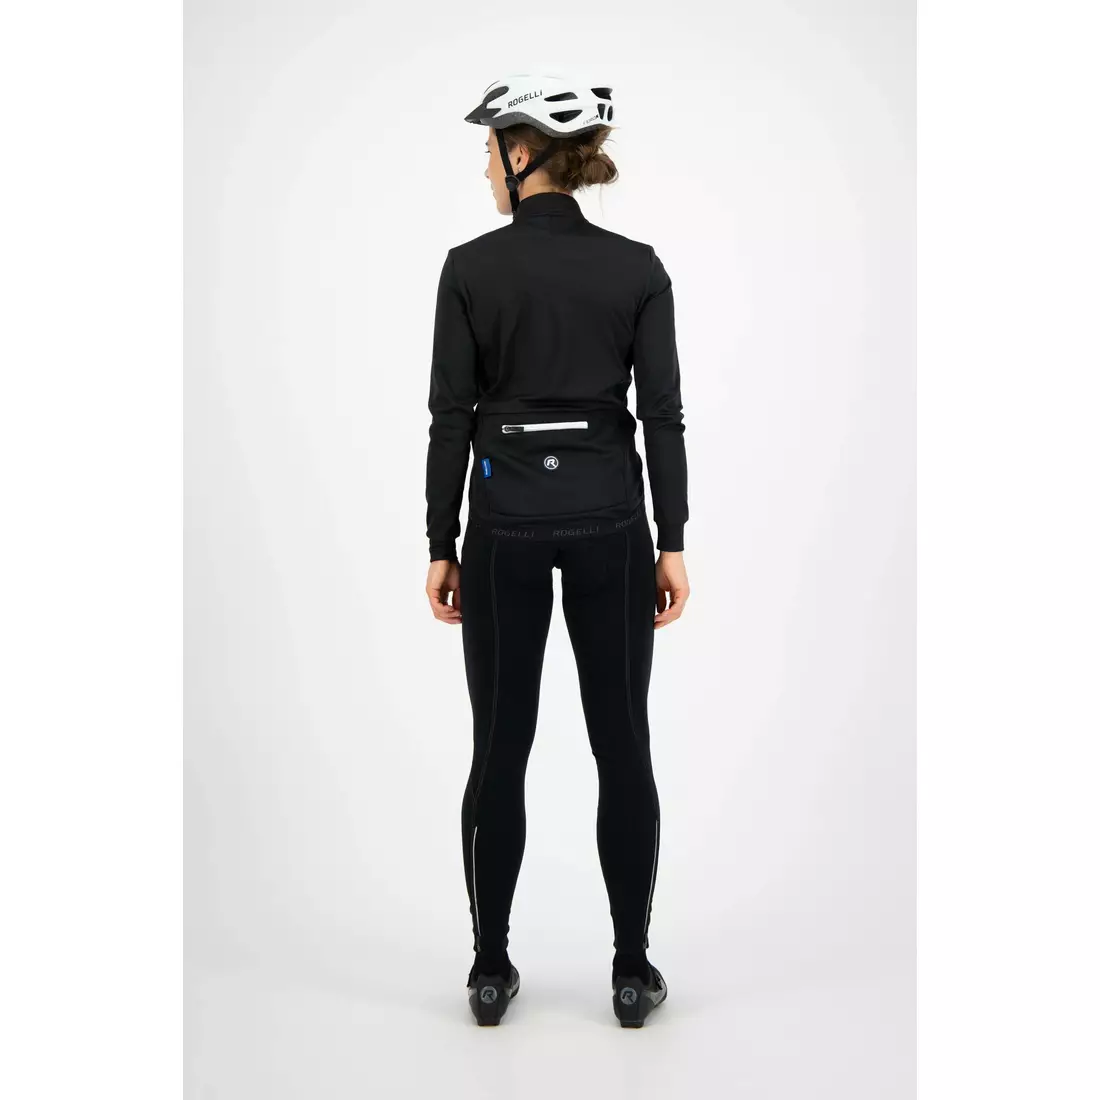 ROGELLI PESARA dámska zimná cyklistická bunda, čierna a biela